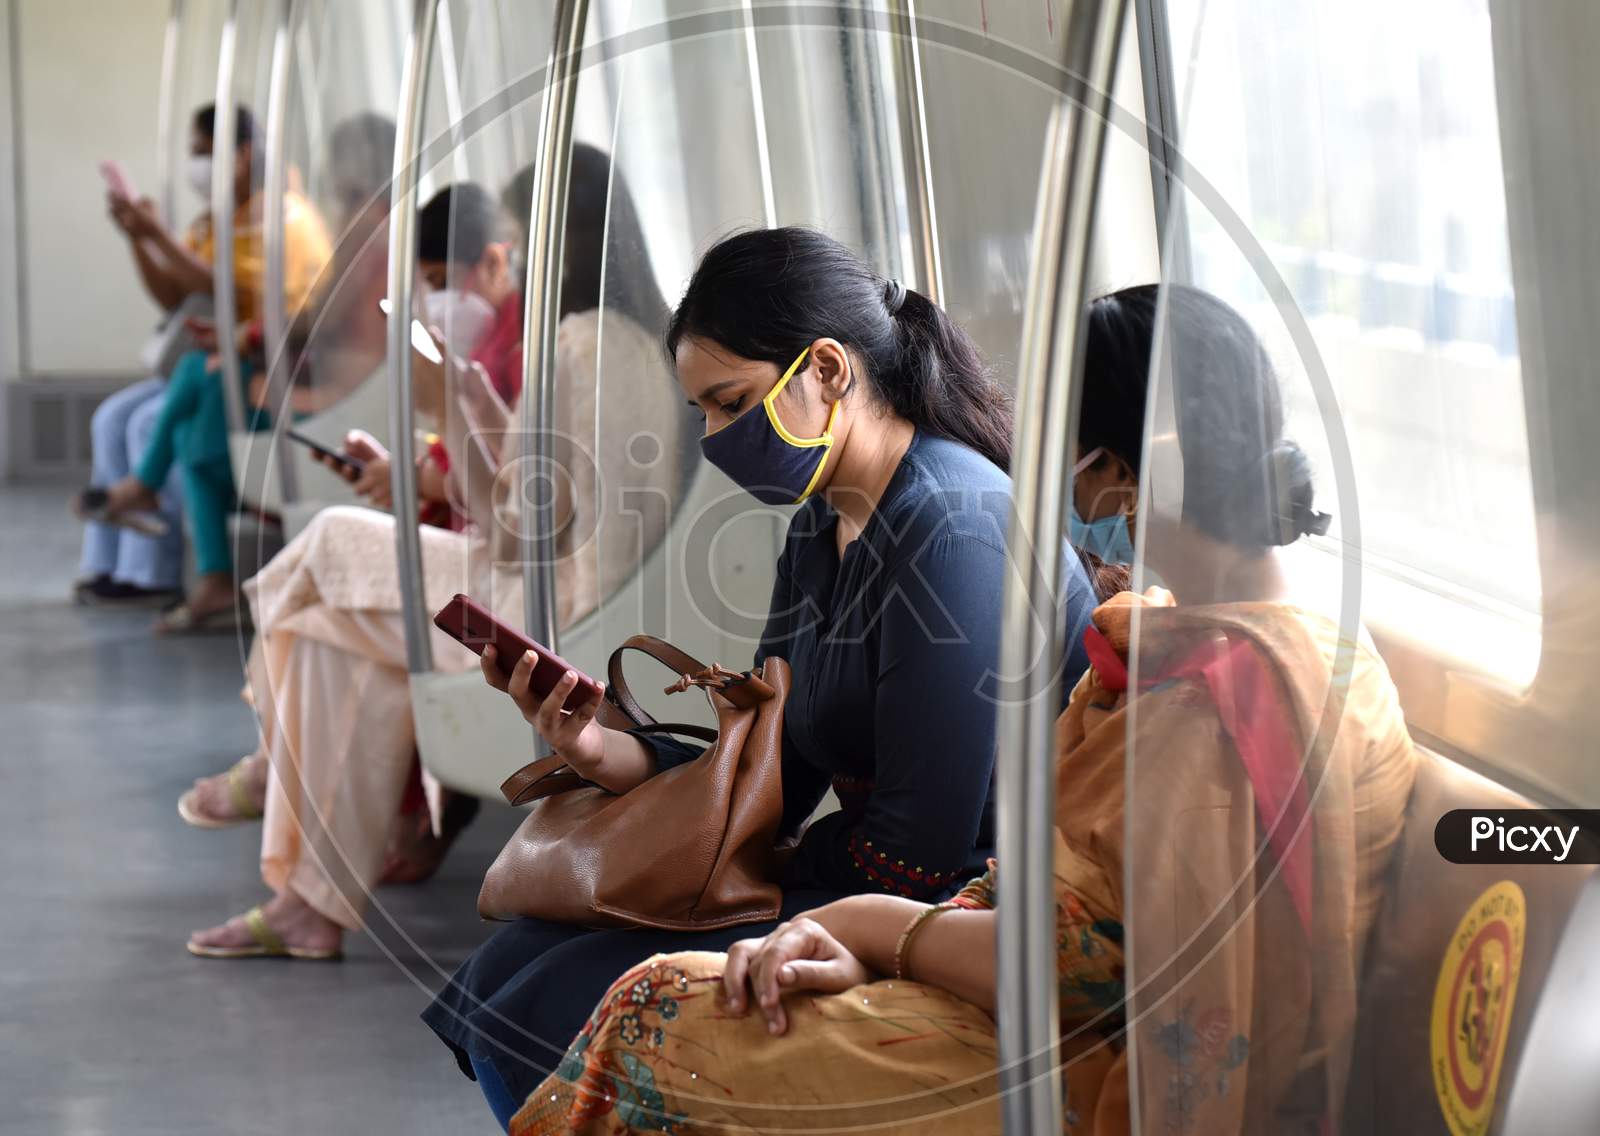 Passengers wearing face masks travel on a Delhi metro train, amidst the spread of coronavirus disease (COVID-19), in New Delhi, India, September 10, 2020.